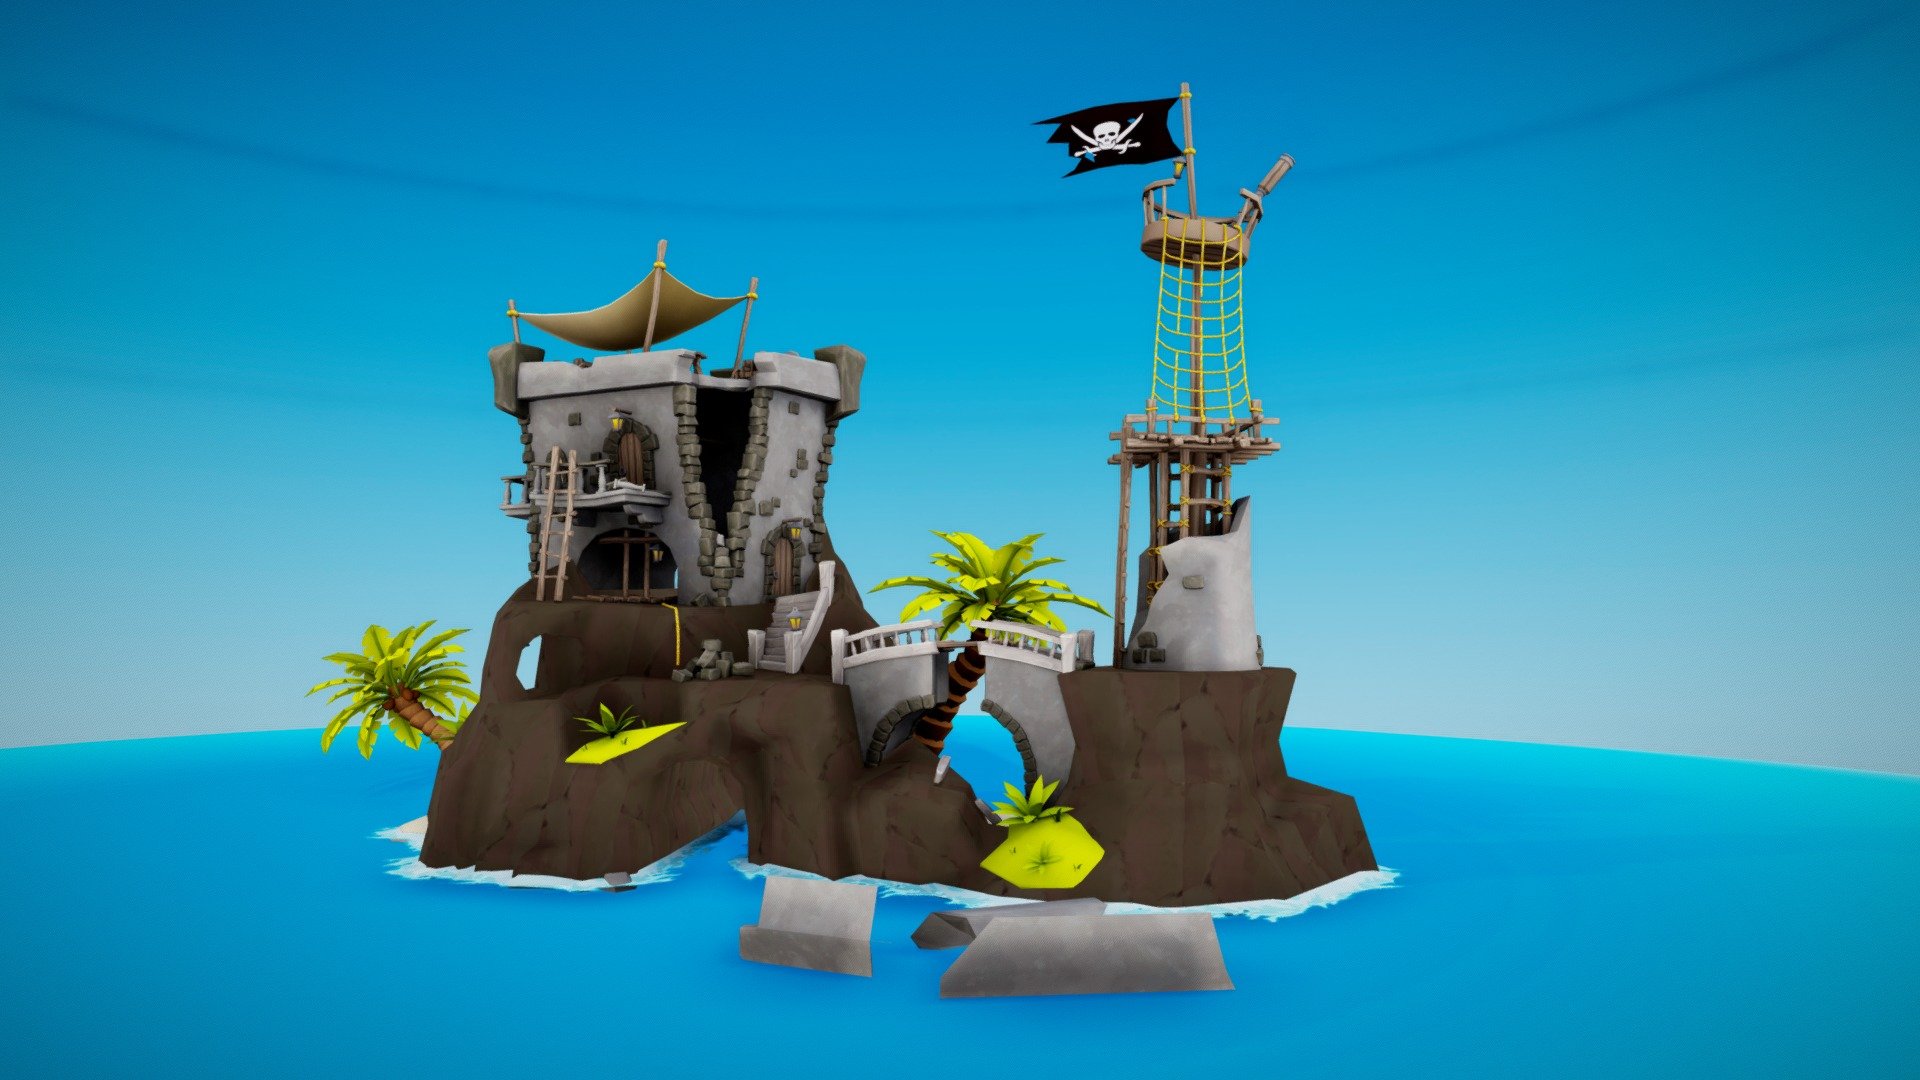 Pirate Island: The crossroads